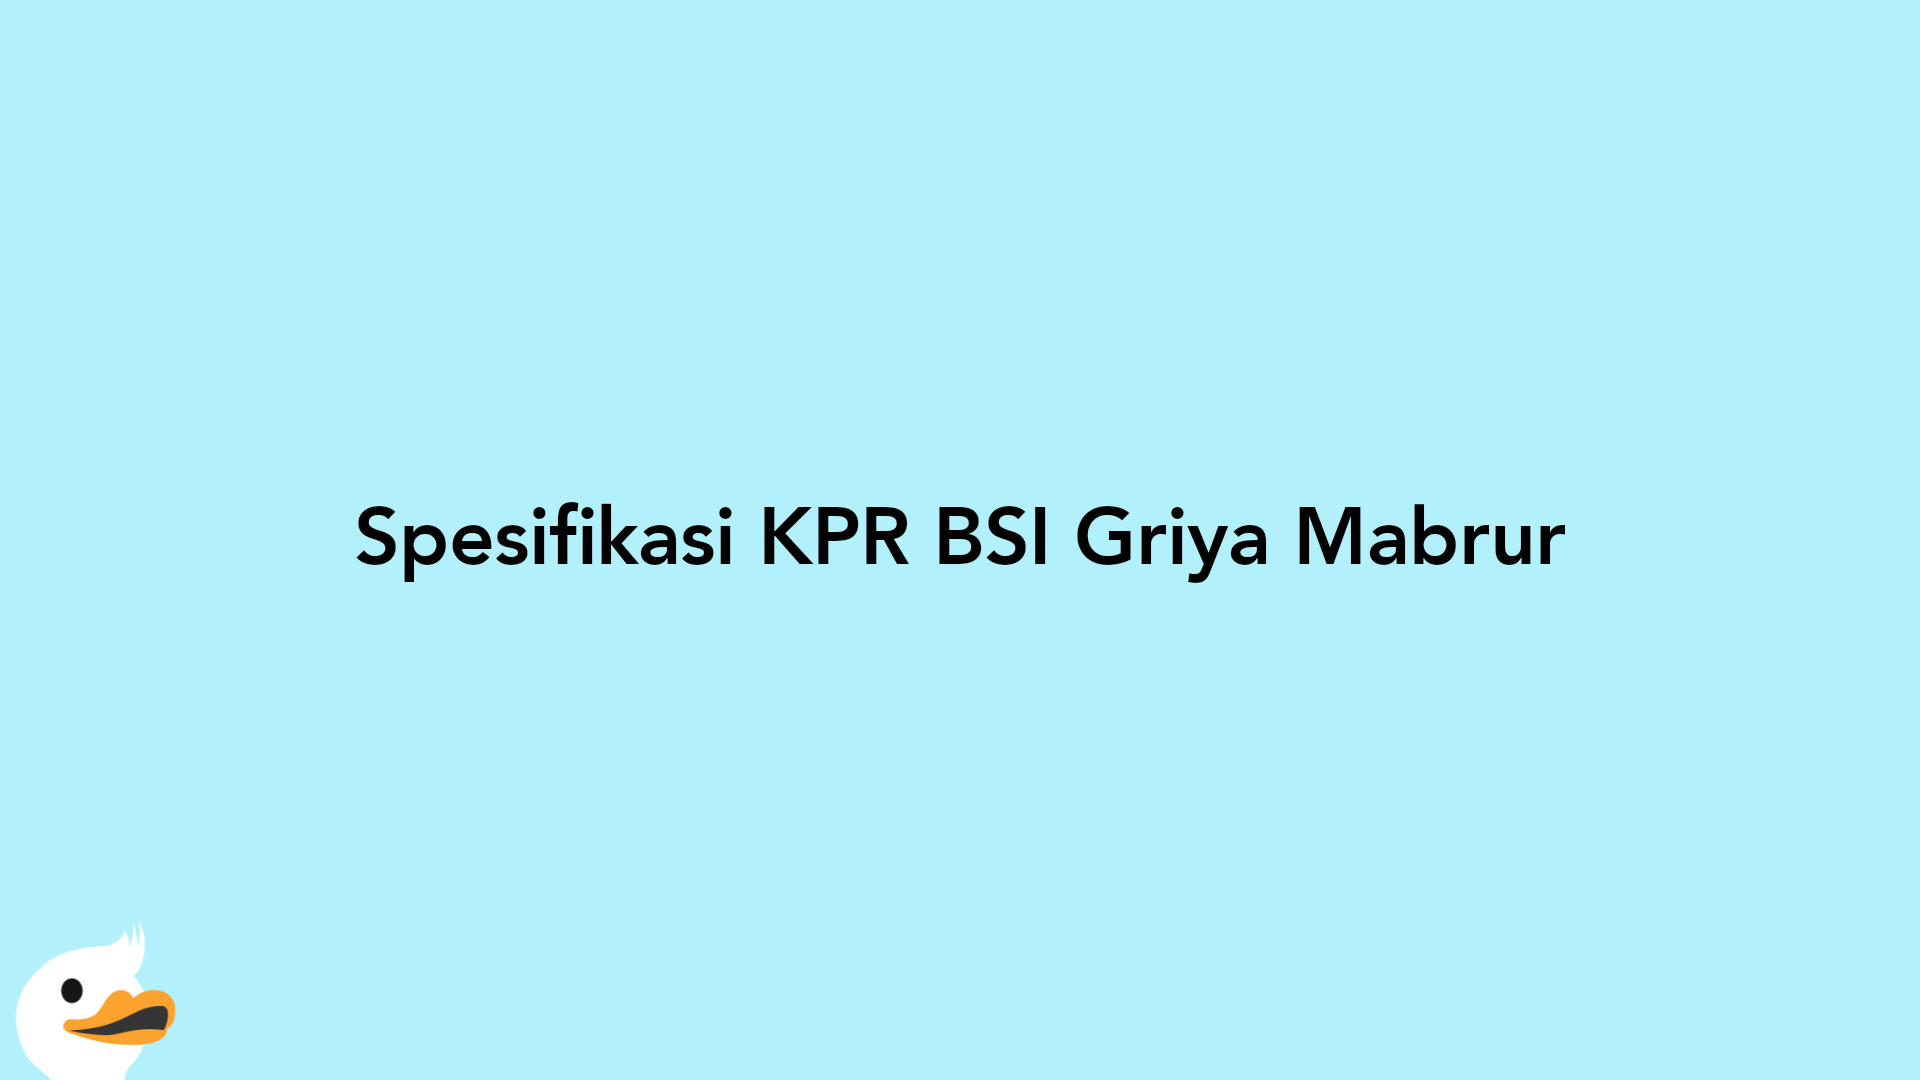 Spesifikasi KPR BSI Griya Mabrur